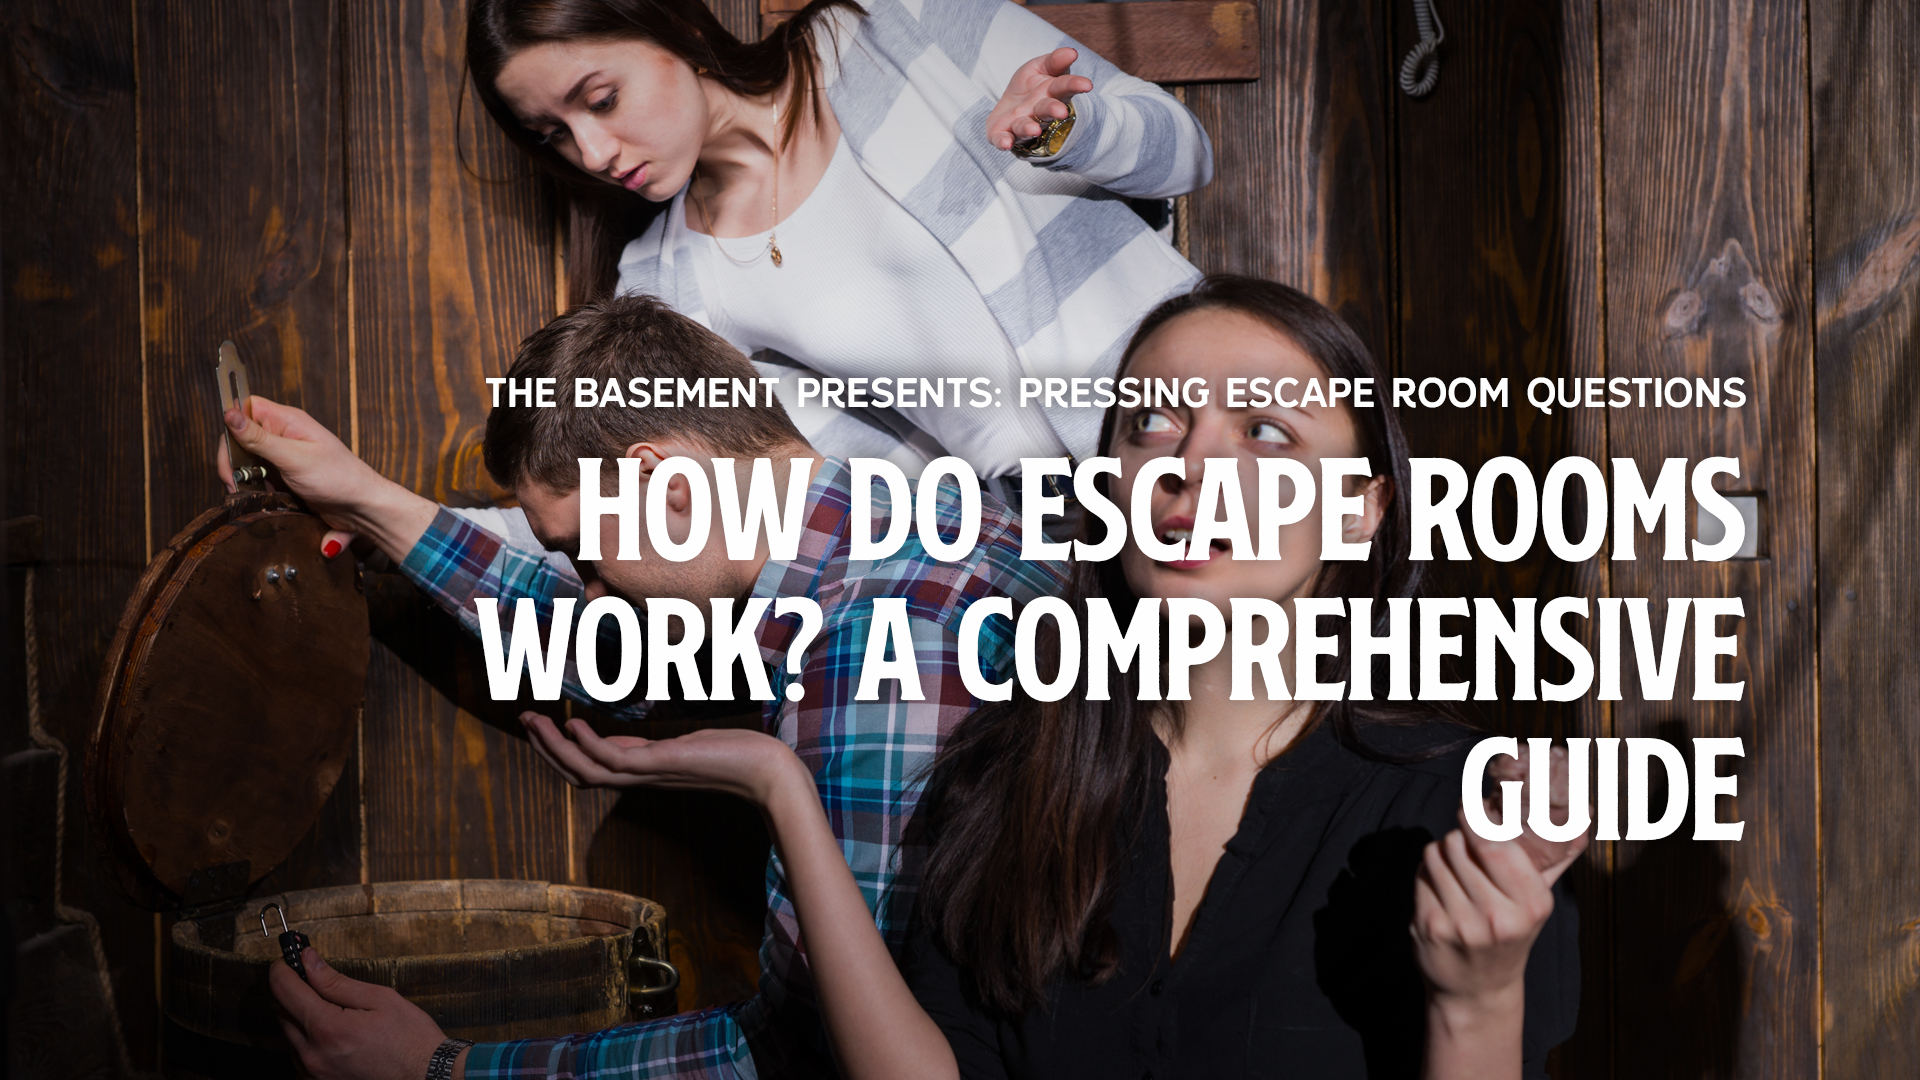 How do Escape Rooms Work? A Comprehensive Guide